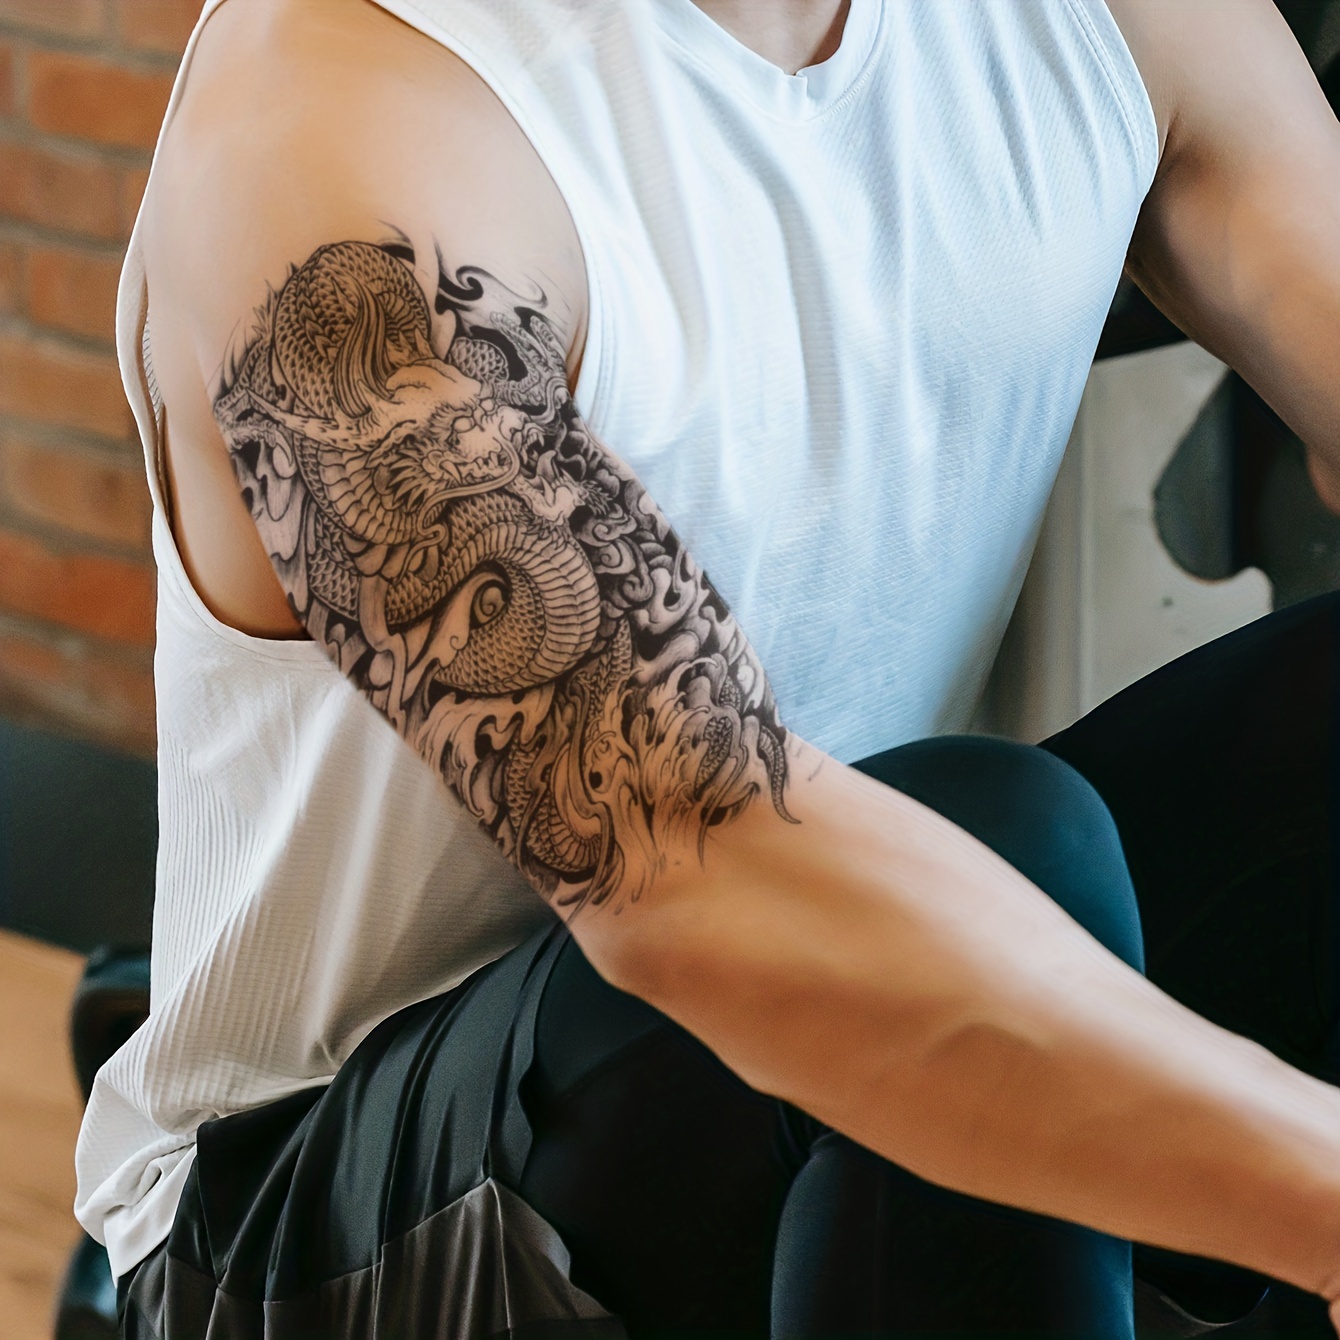 Fake Tattoo The Hand Of Pray Men Women Arm Chest Back Body Art Temporary  Sticker